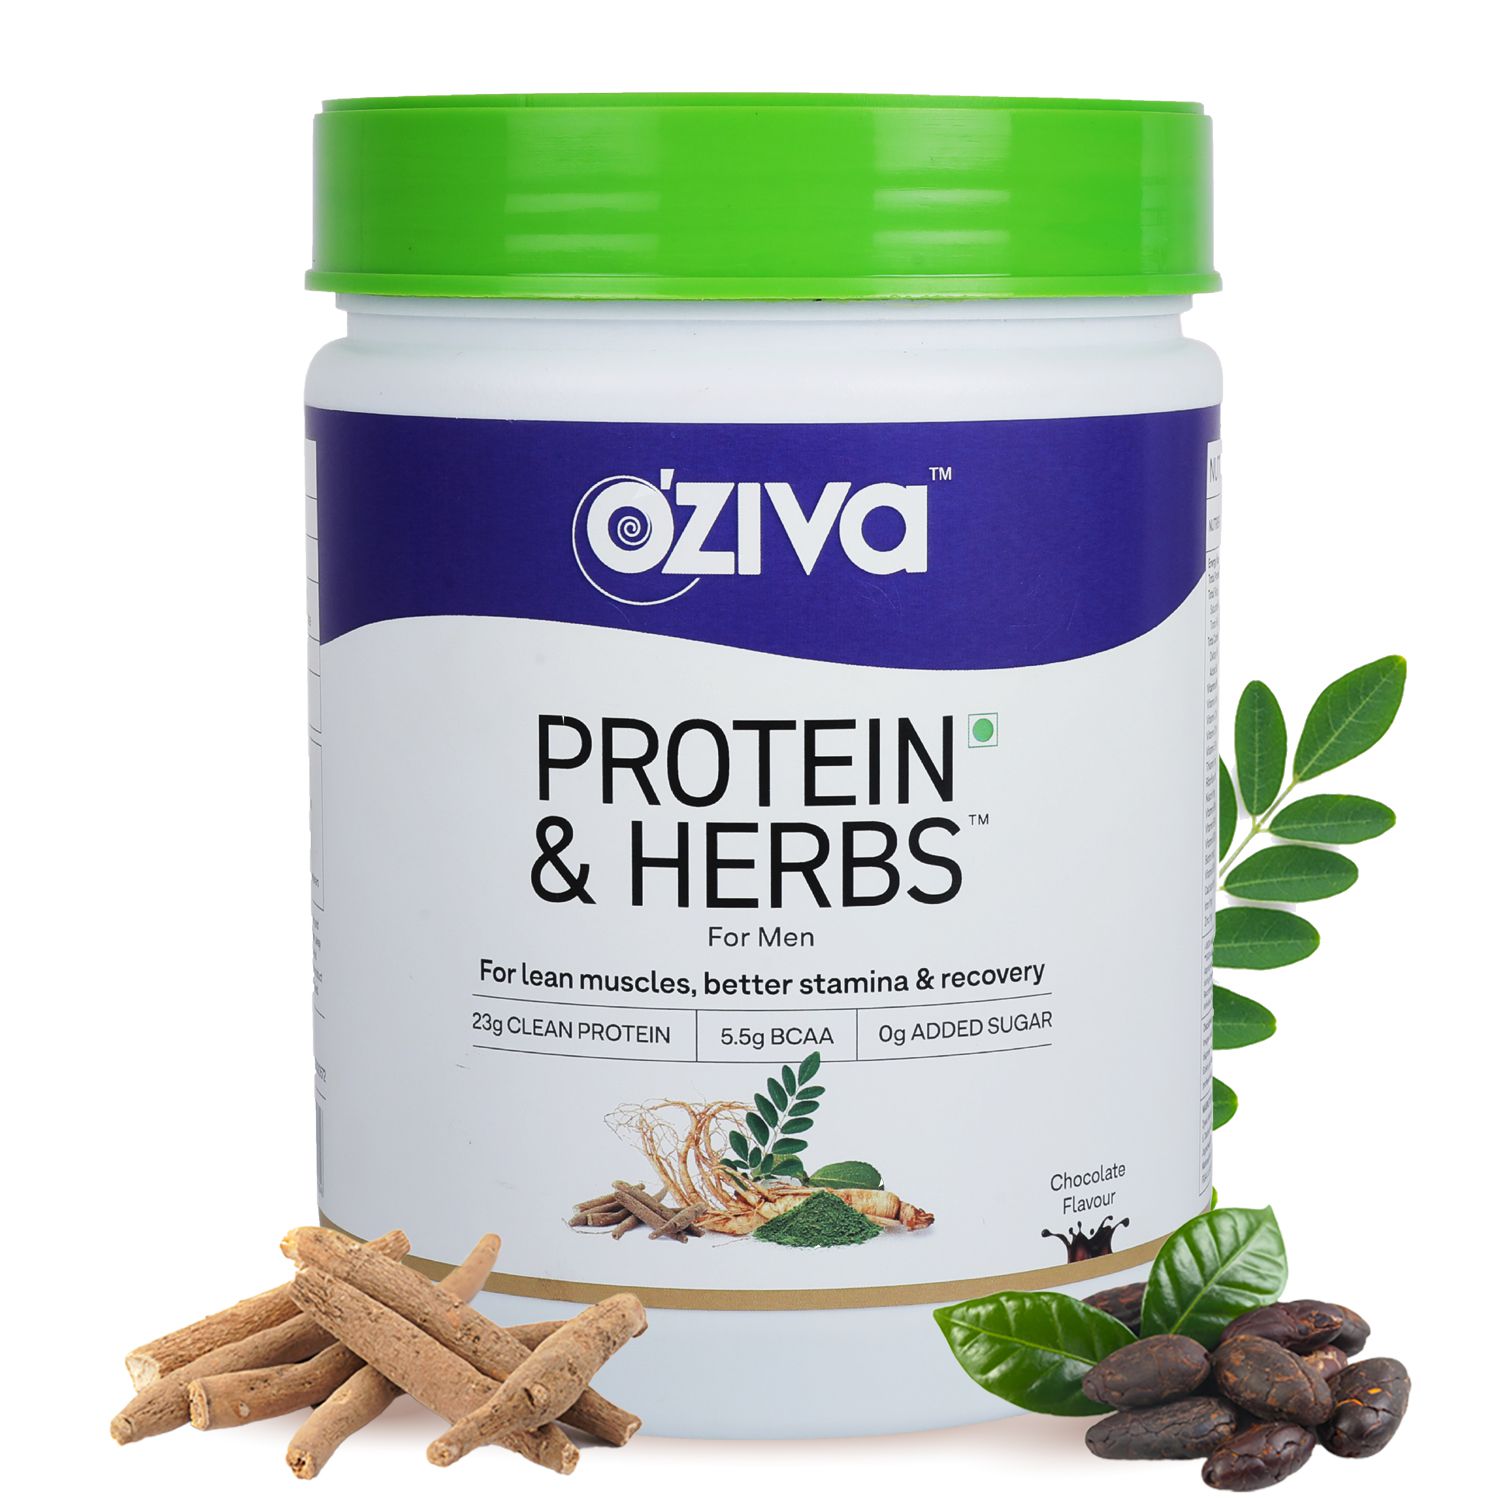 OZiva Protein & Herbs, Men (23g Whey Protein, 5.5g BCAA & Ayurvedic herbs like Ashwagandha, Chlorella & Musli) for Better Stamina & Lean Muscles, Chocolate,  500g